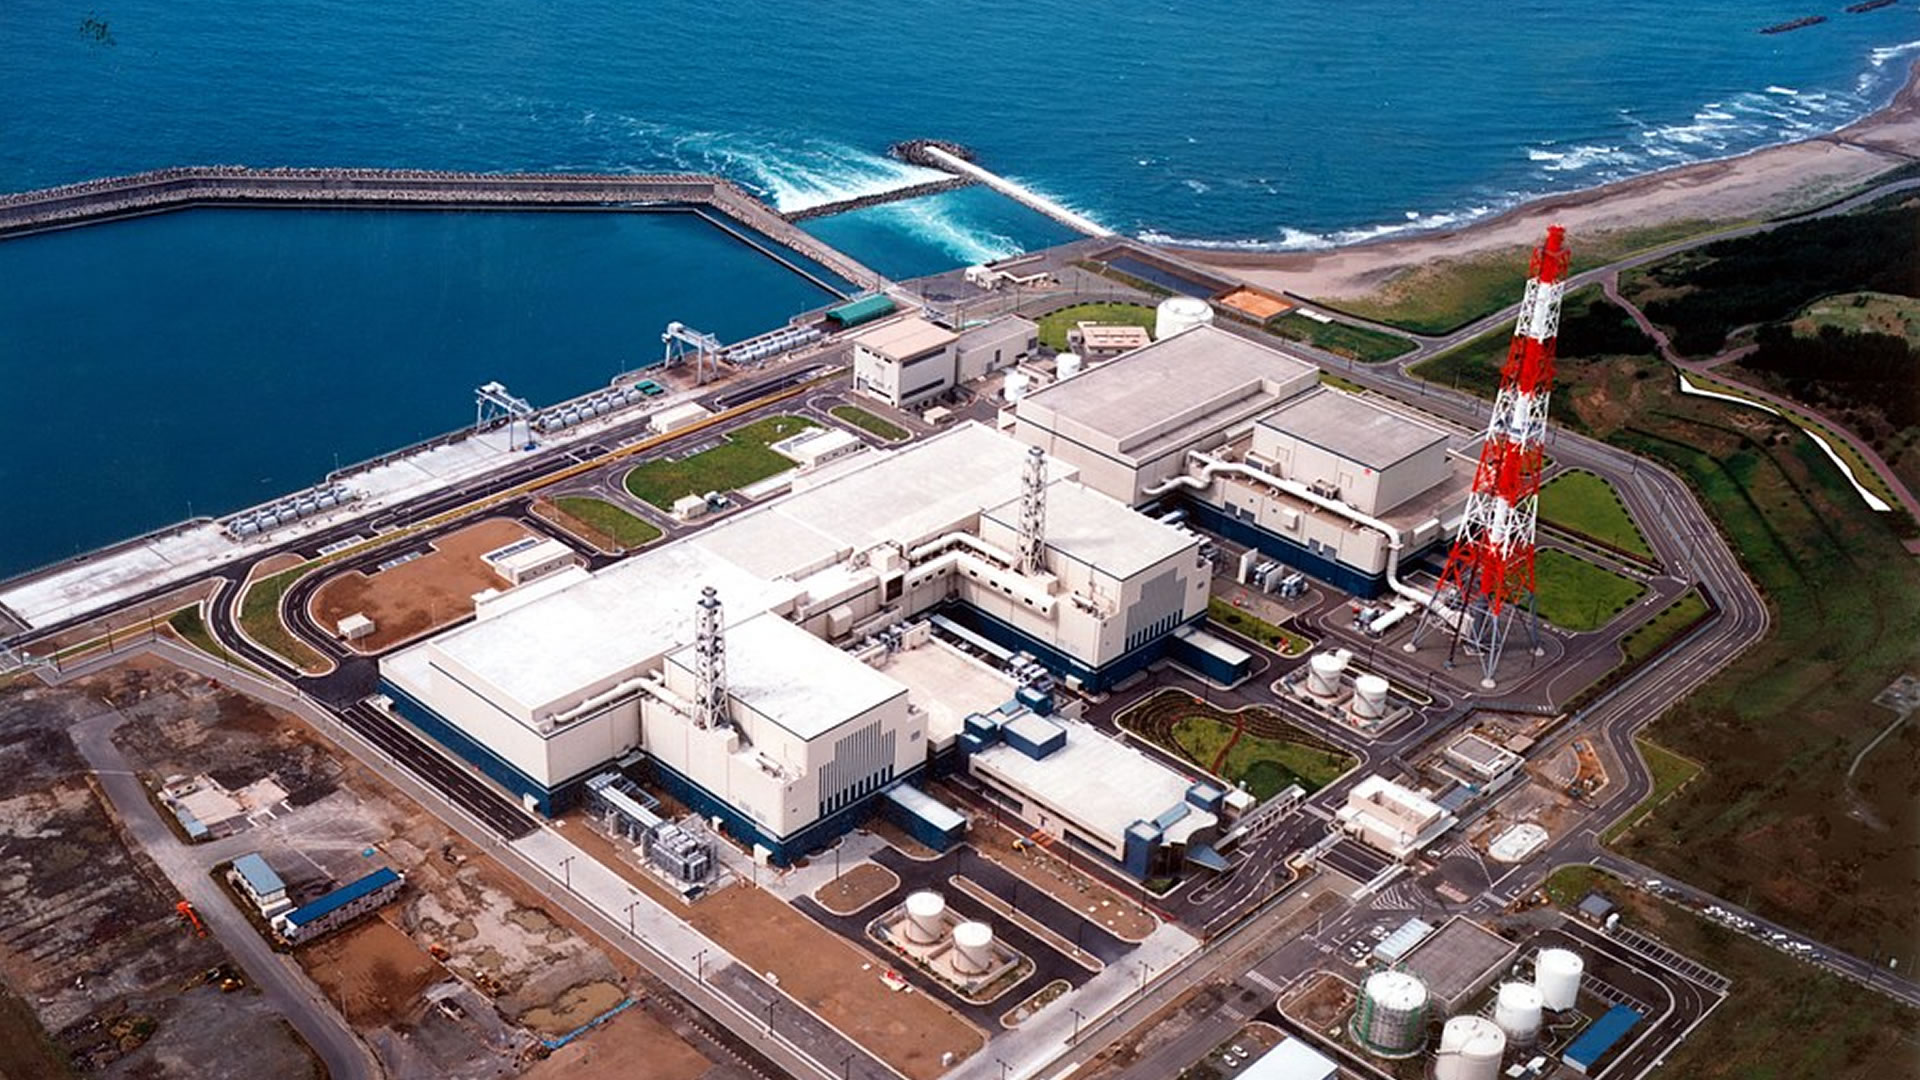 The world’s biggest nuclear plant, Kashiwazaki-Kariwa, to reawaken with new fuel [Video]